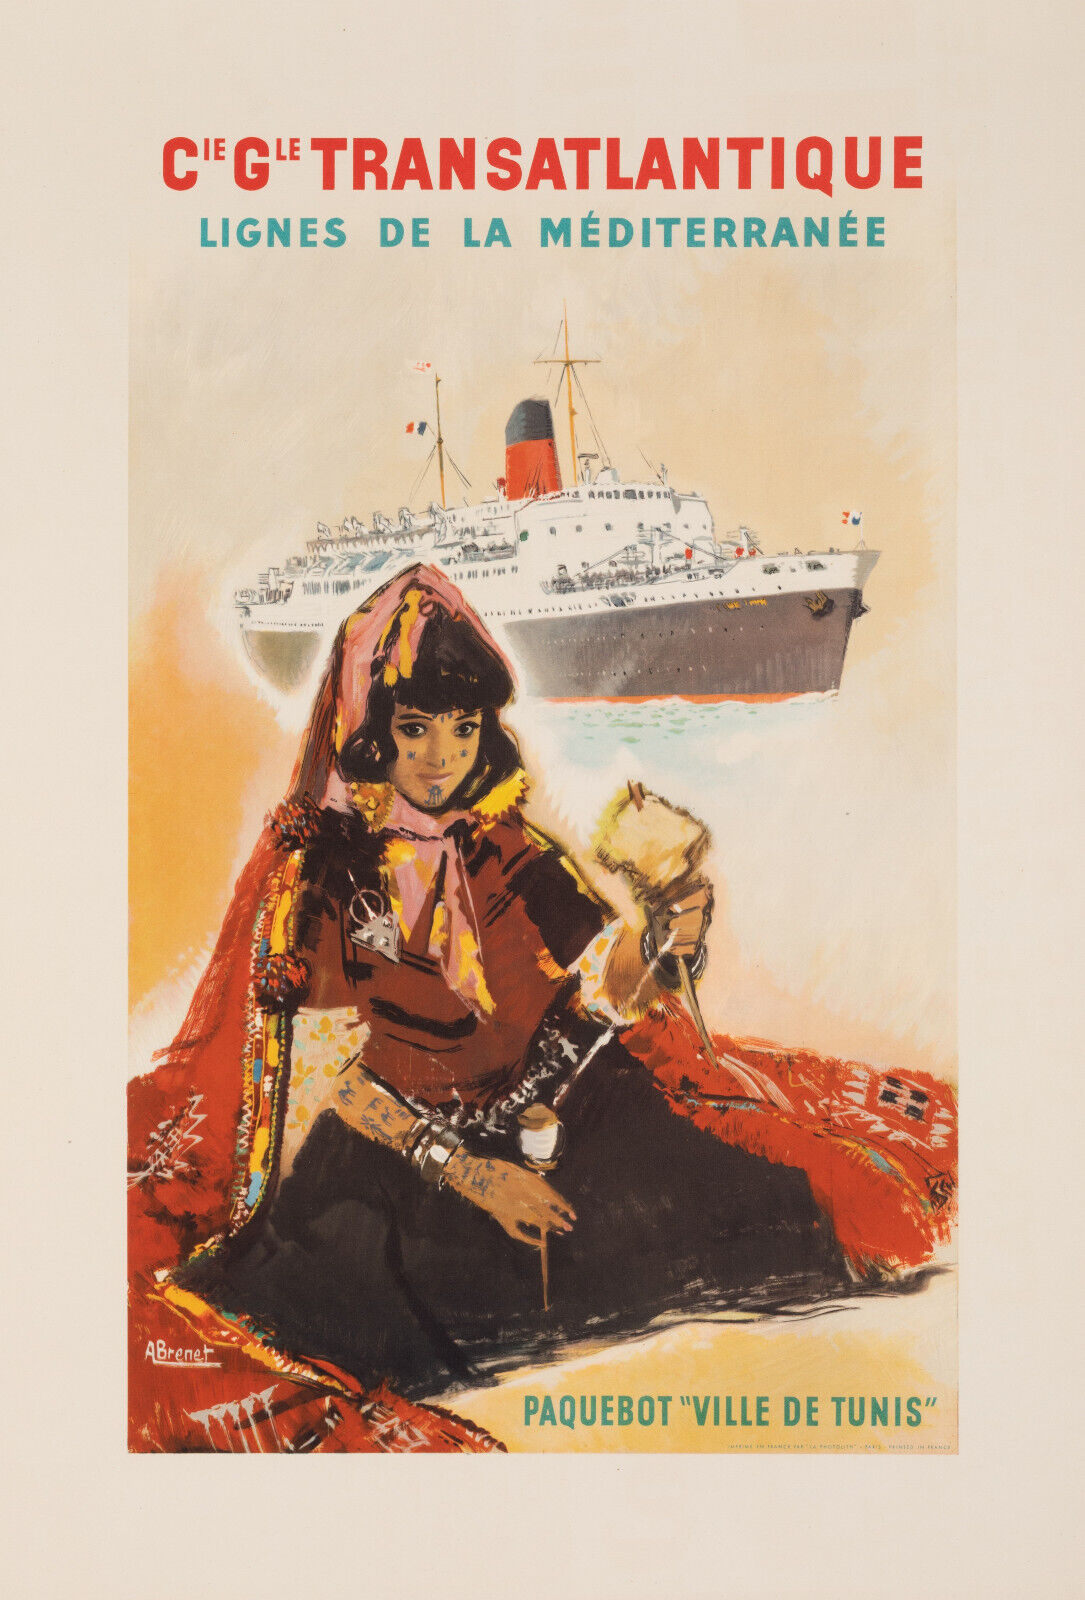 Original poster, Brenet, Cie Gle Transatlantique, Tunis liner, boat, 1955